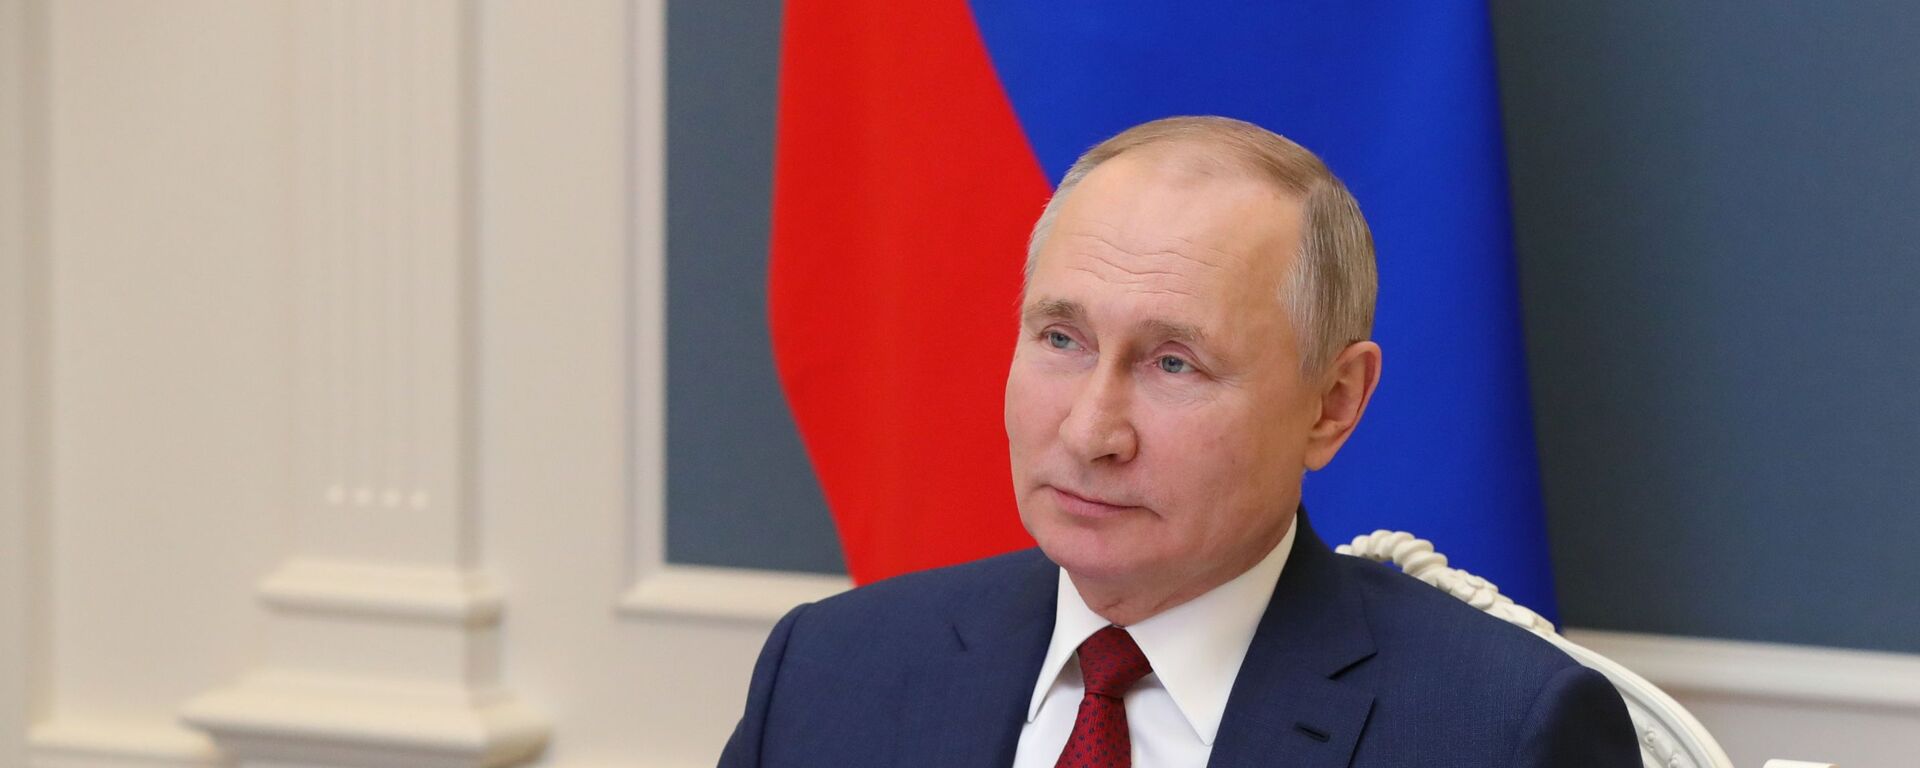 Президент РФ В. Путин выступил на сессии онлайн-форума Давосская повестка дня 2021 - Sputnik Таджикистан, 1920, 20.07.2021